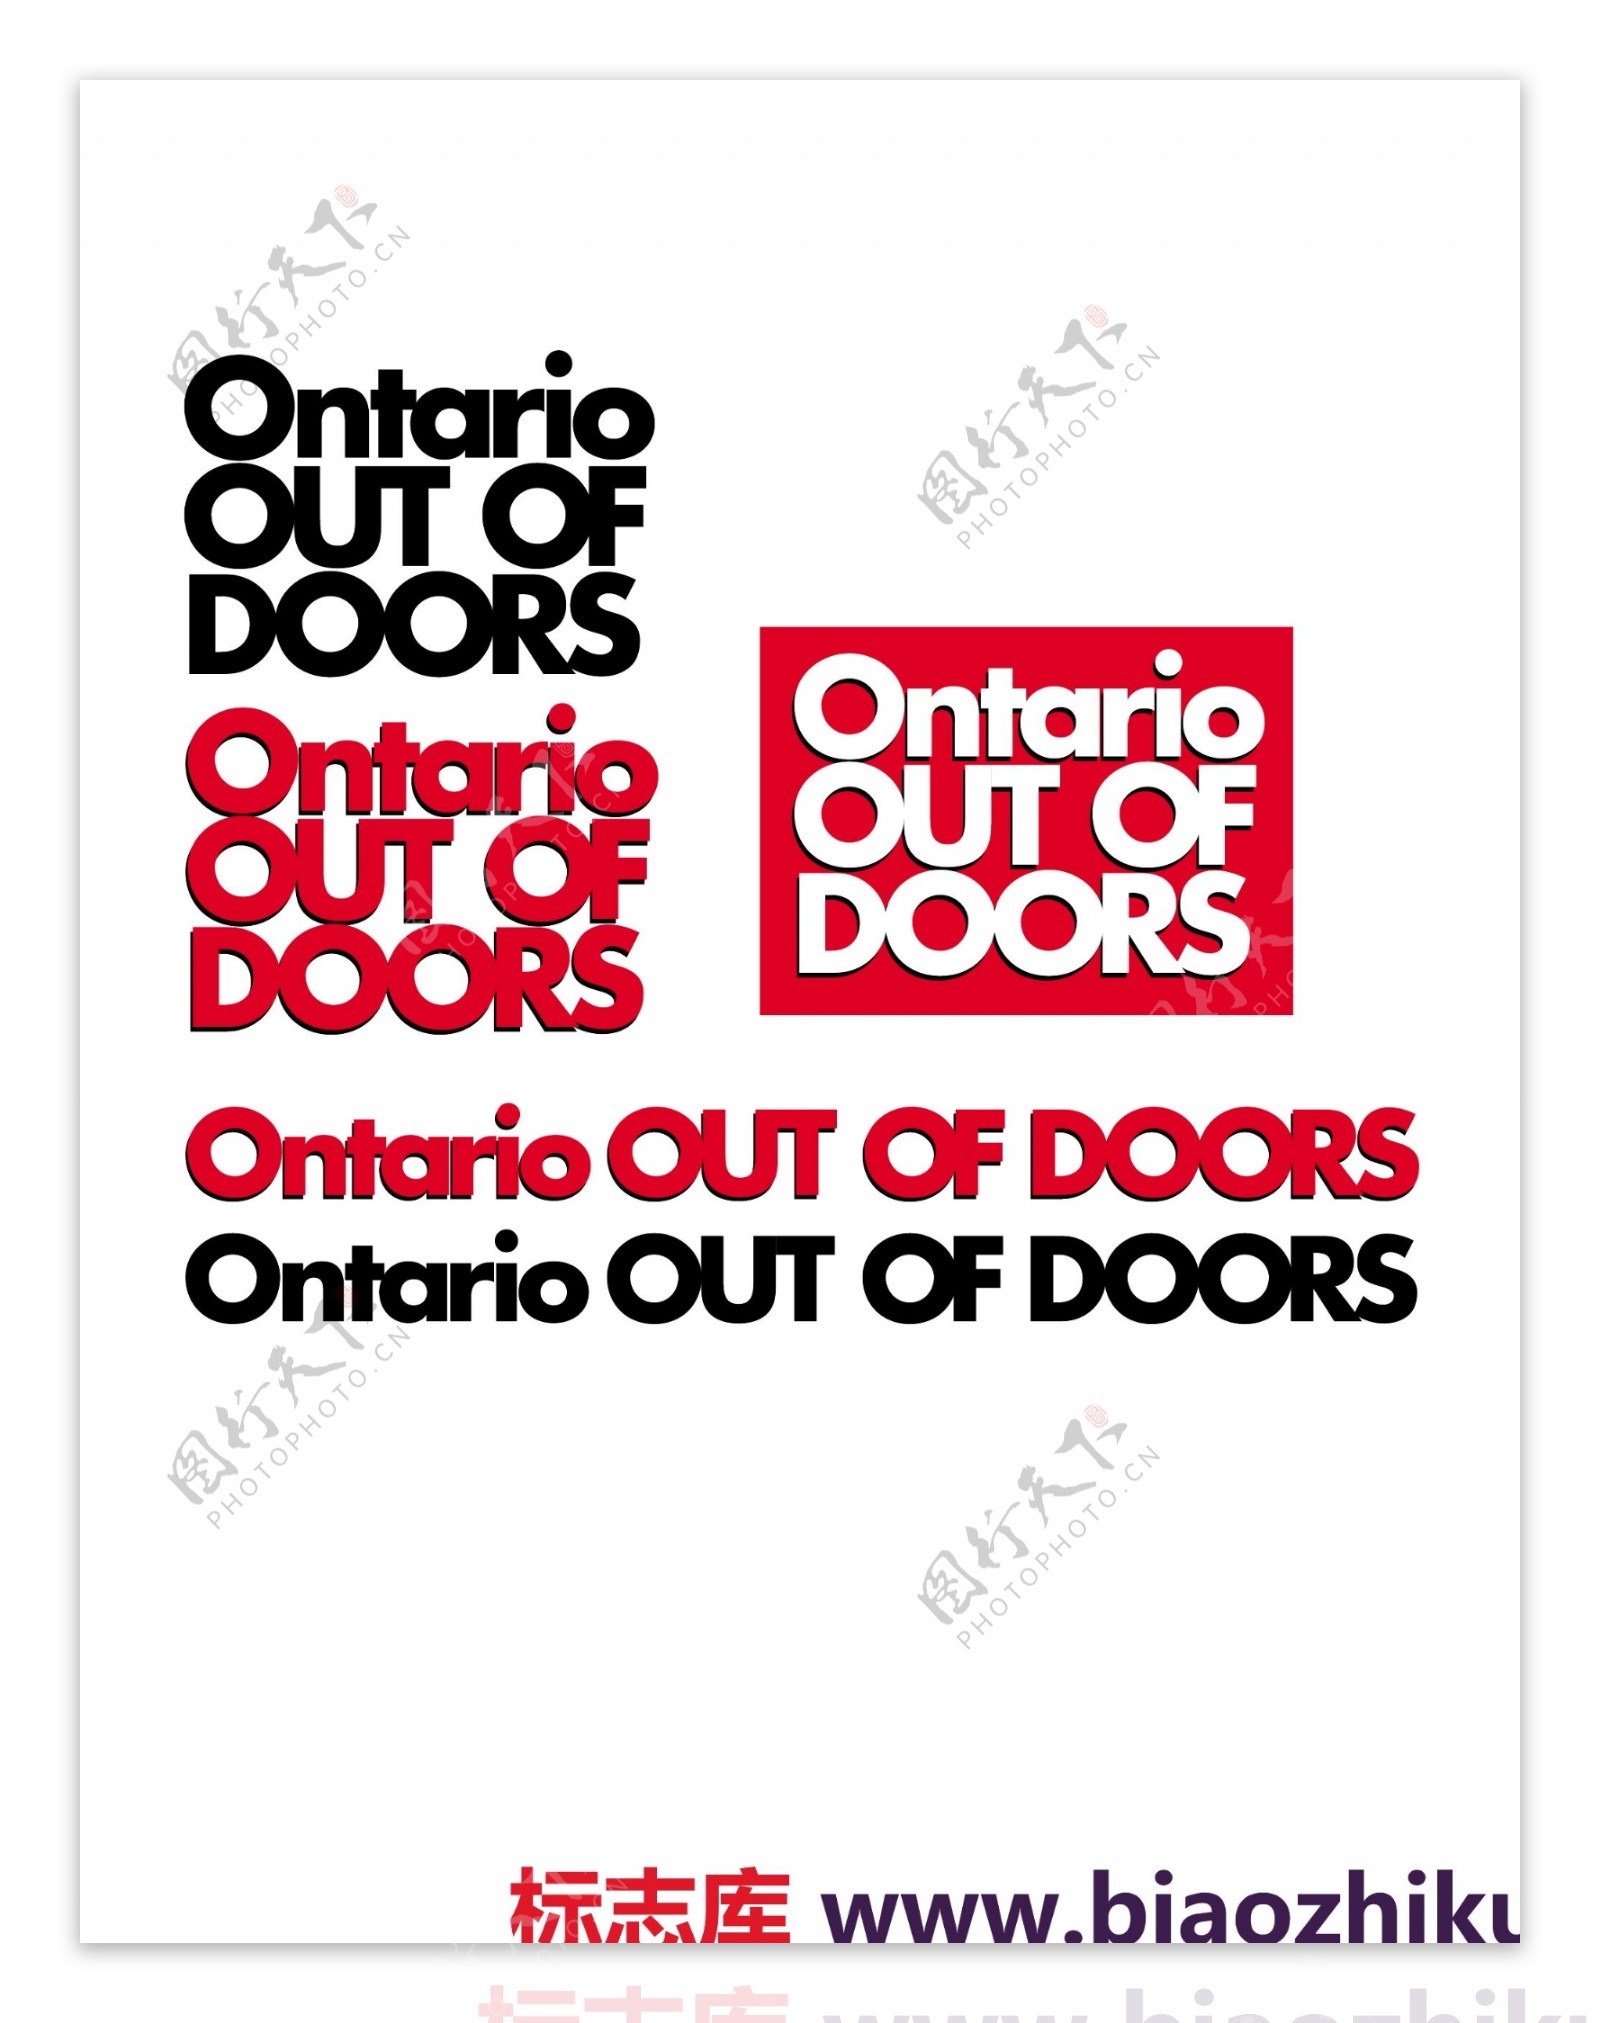 OntarioOUTOFDOORSlogo设计欣赏OntarioOUTOFDOORS体育比赛标志下载标志设计欣赏